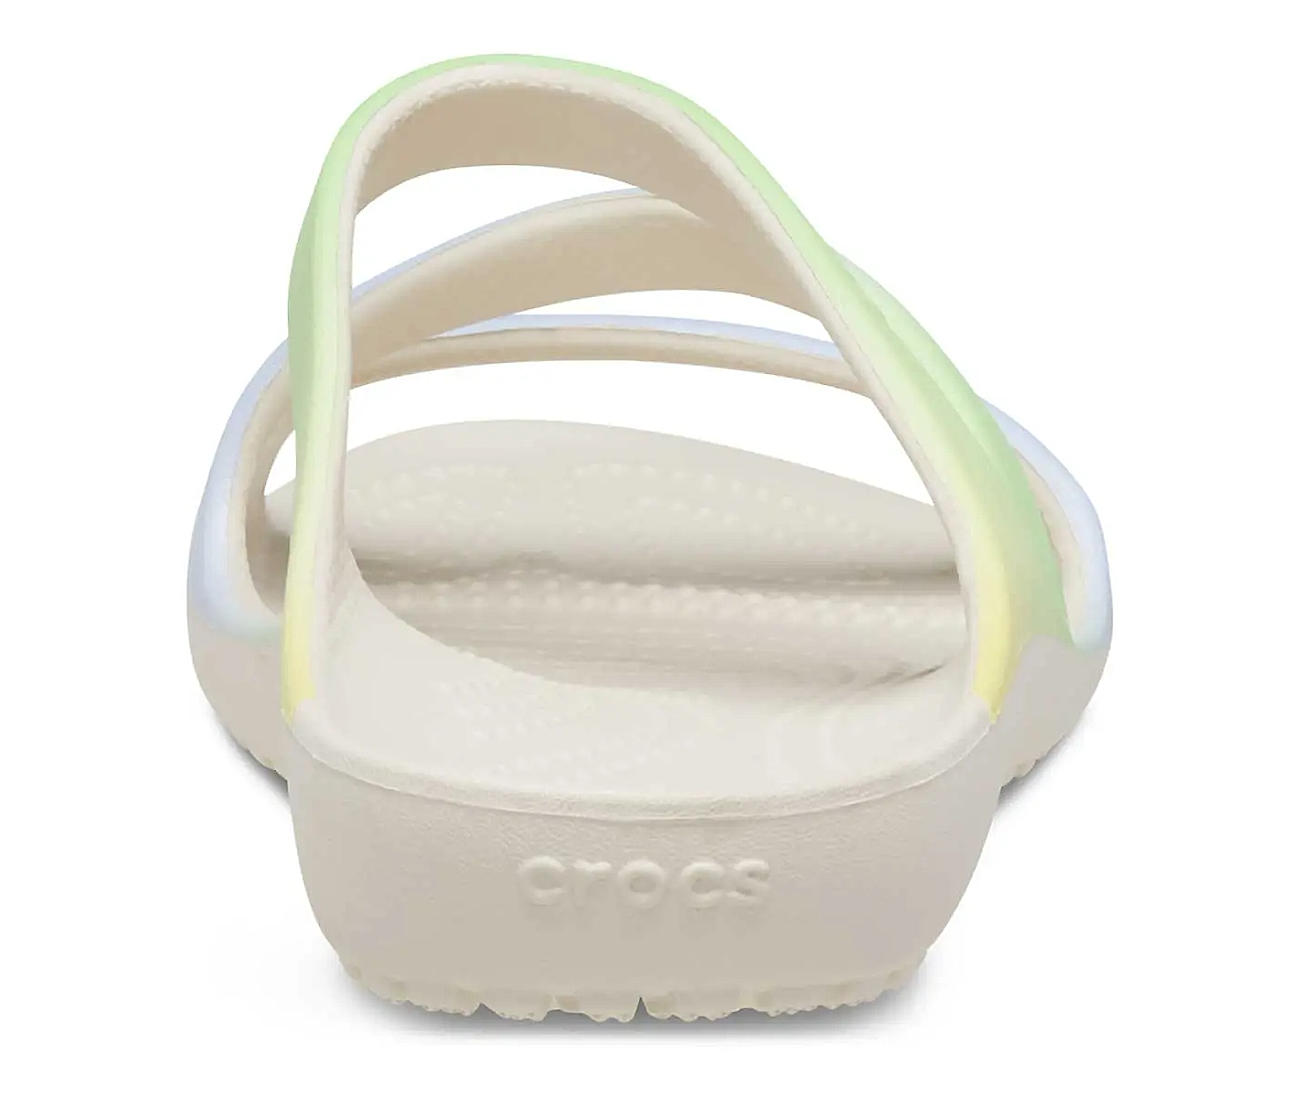 Crocs Brooklyn Strappy Low Wedge Women's Sandal 3 colors Sizes 5-10 206751  | eBay